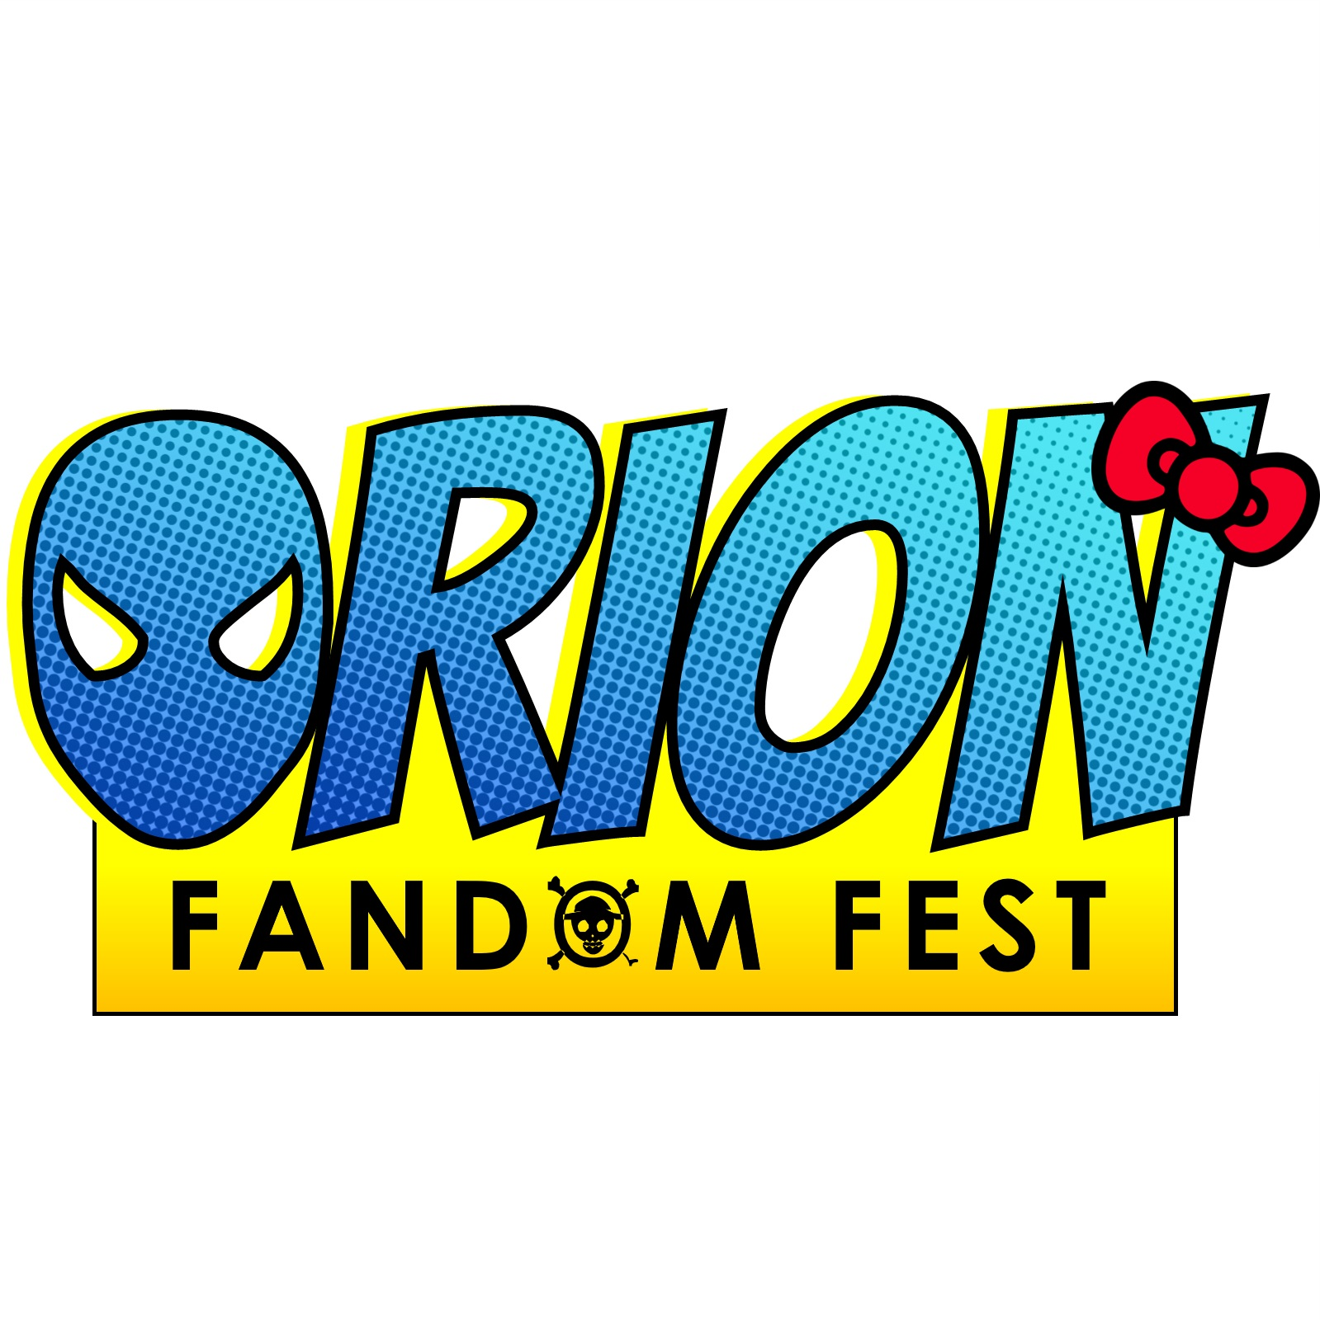 Fandom Fest logo